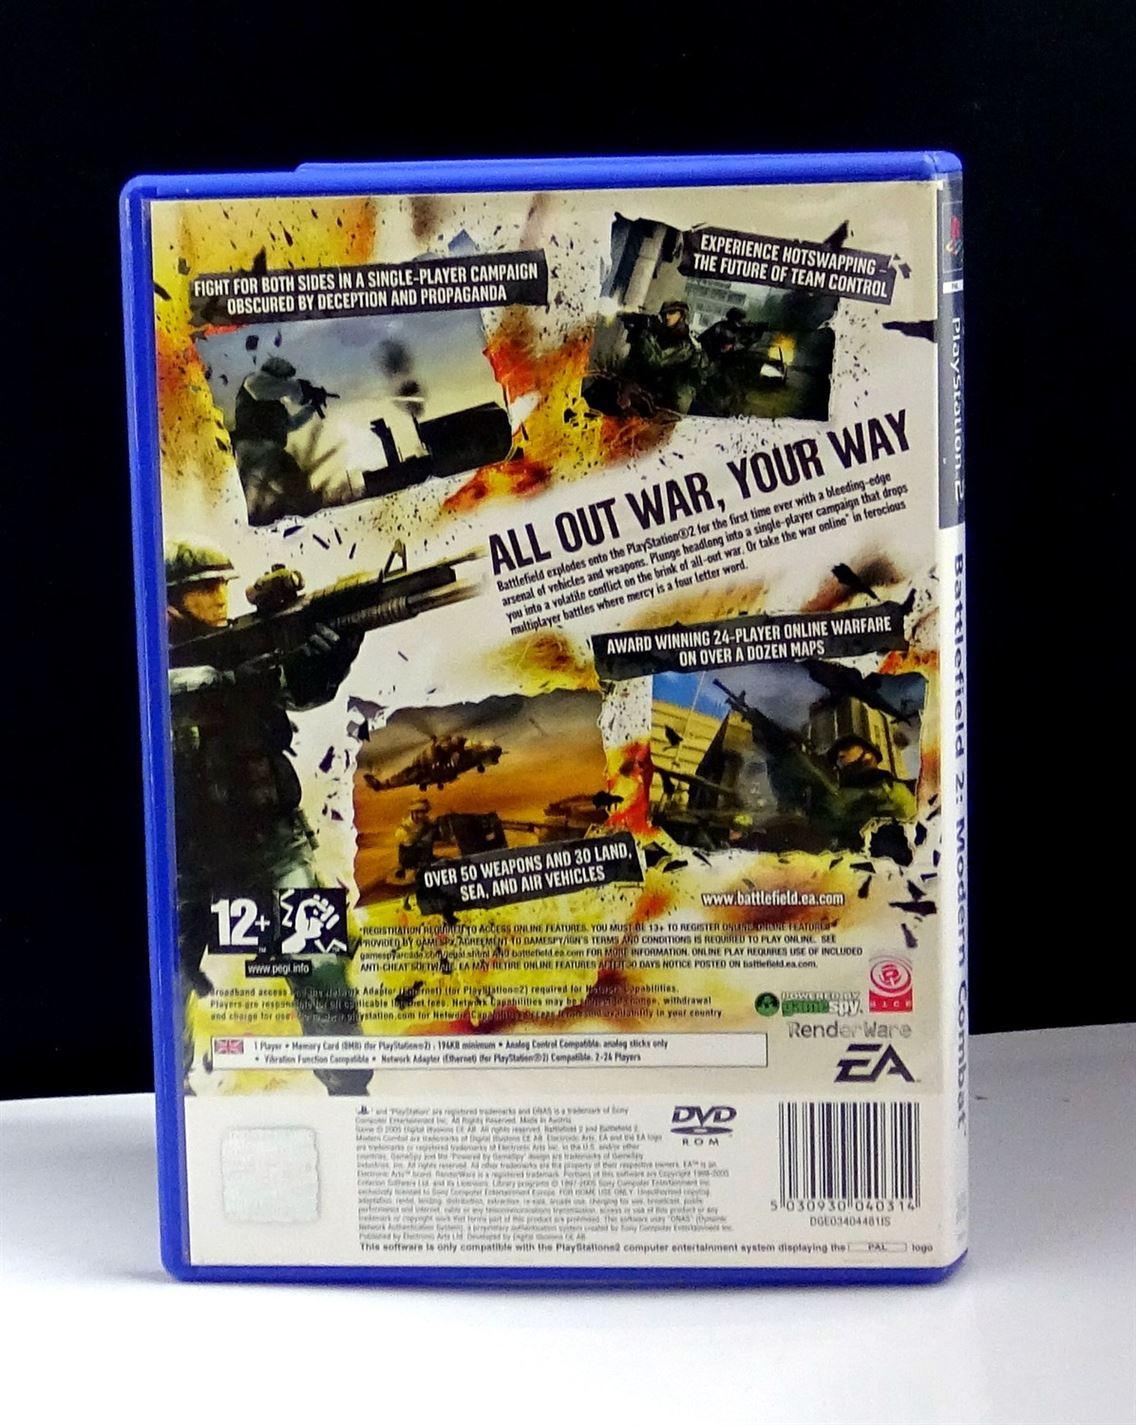 Battlefield 2 Modern Combat PS2 (Playstation 2) - UK Seller